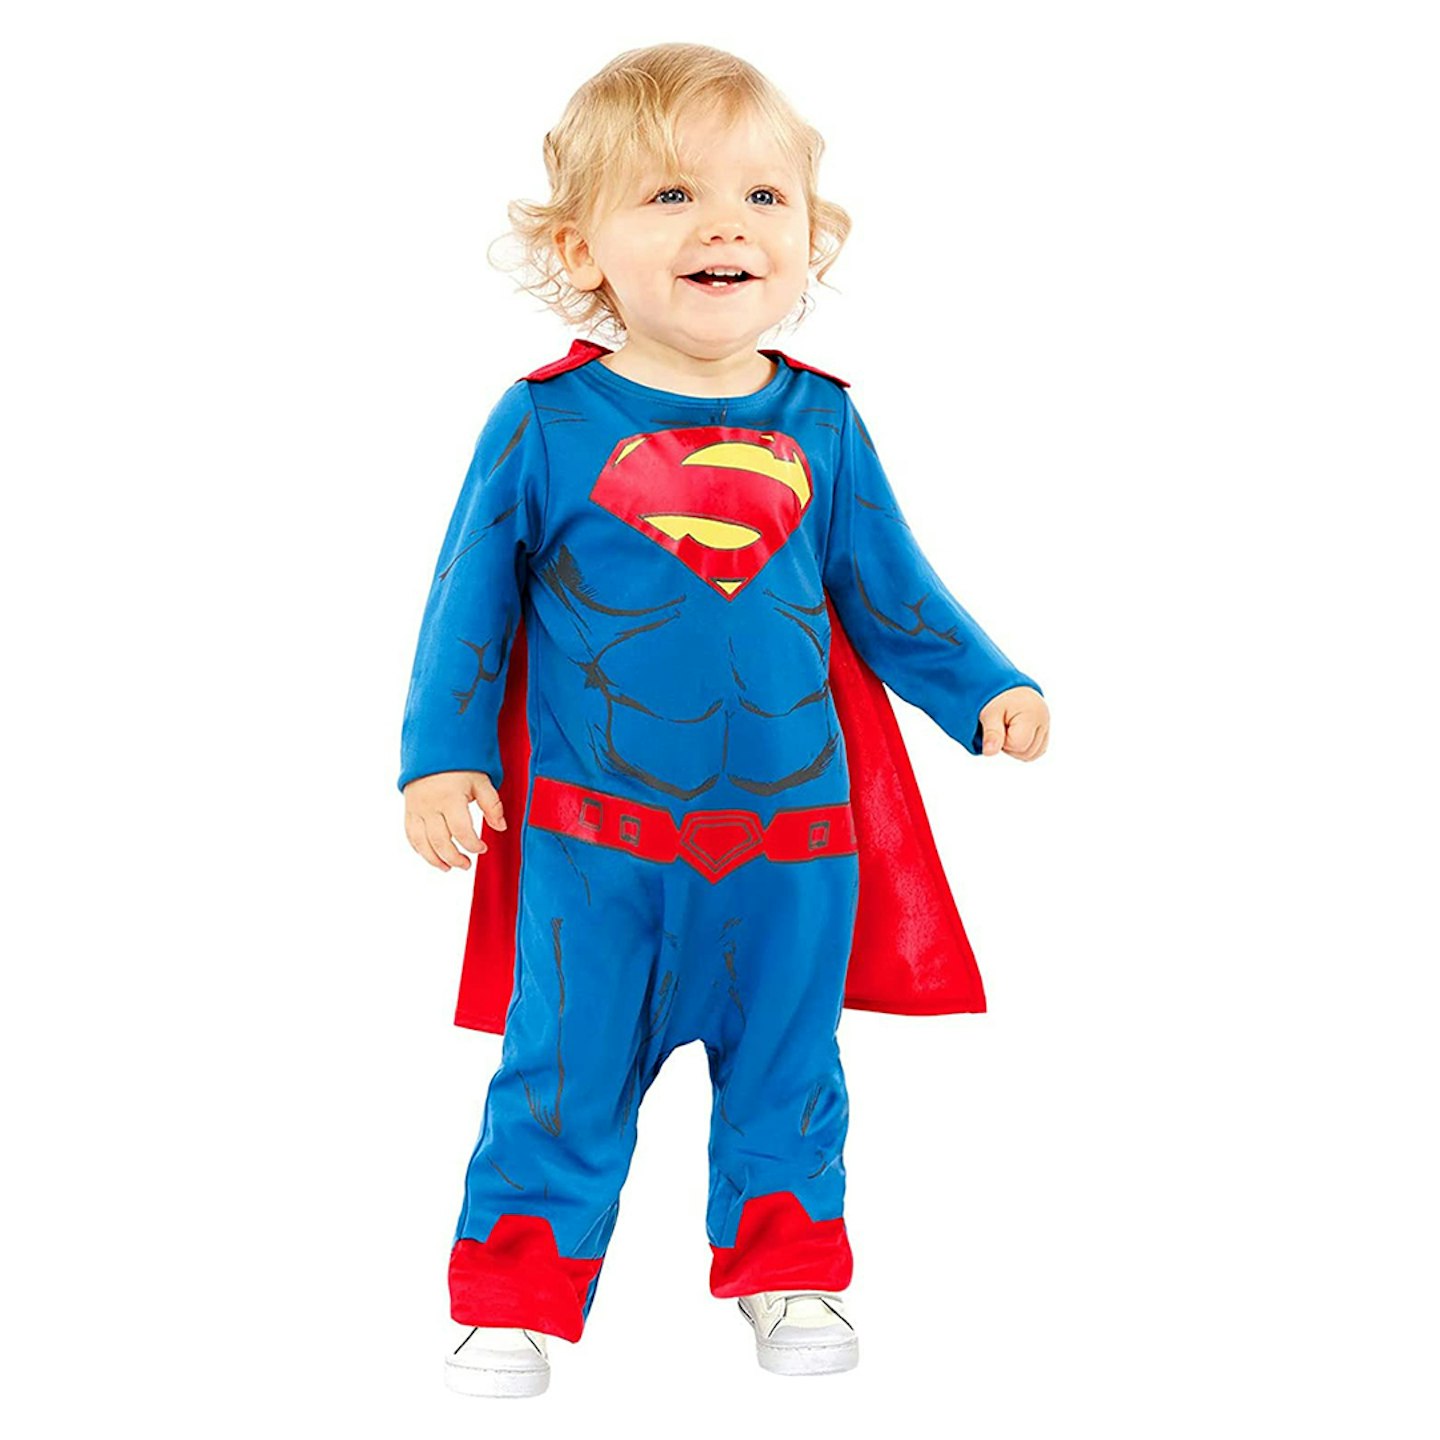 Children's superhero costumes for imaginative play